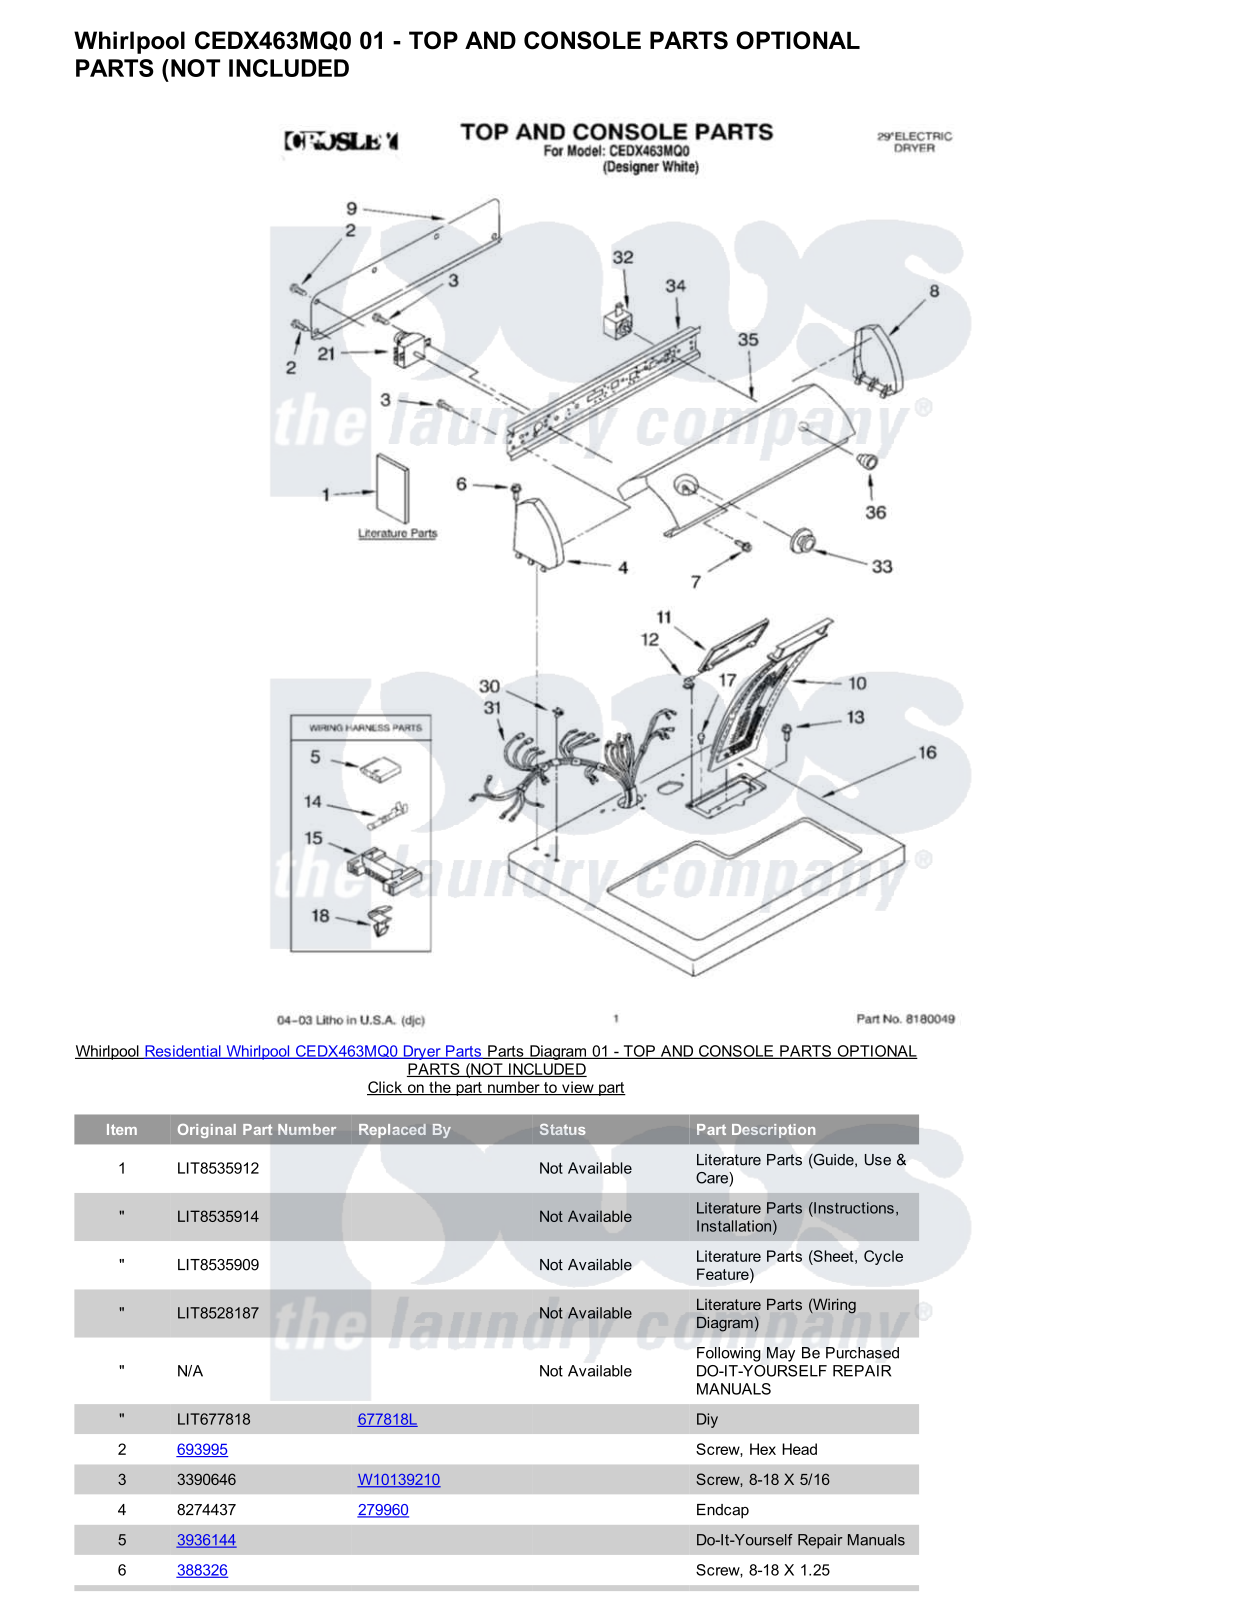 Whirlpool CEDX463MQ0 Parts Diagram